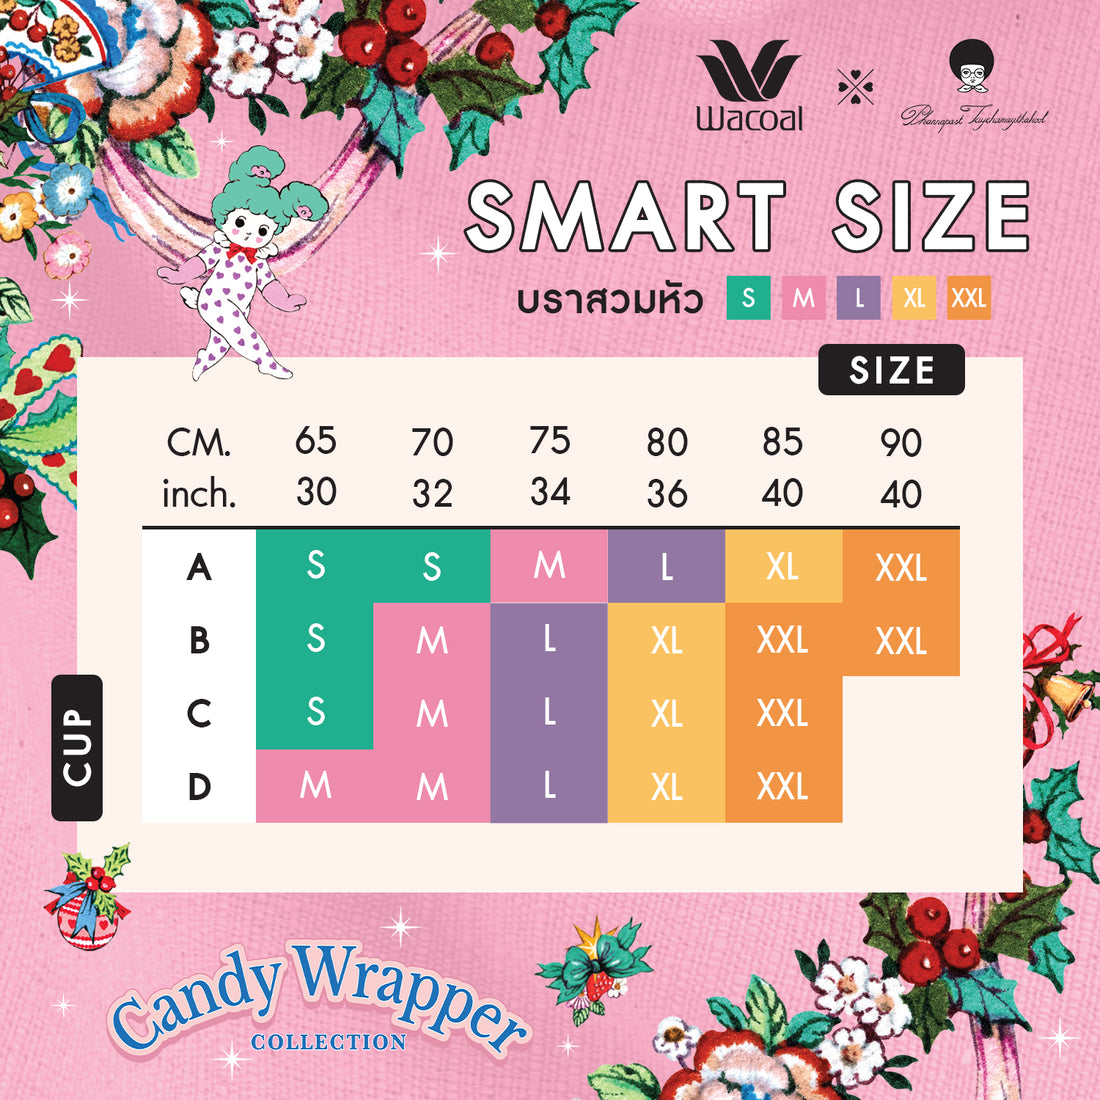 Wacoal x Phannapast: “Candy Wrappers Collection”  บังทรงเสริมฟองน้ำแบบสายเดี่ยว ตกแต่งผ้าลูกไม้ปักลาย Ranibow Sue รุ่น WH4N08  สีดำ (BL)